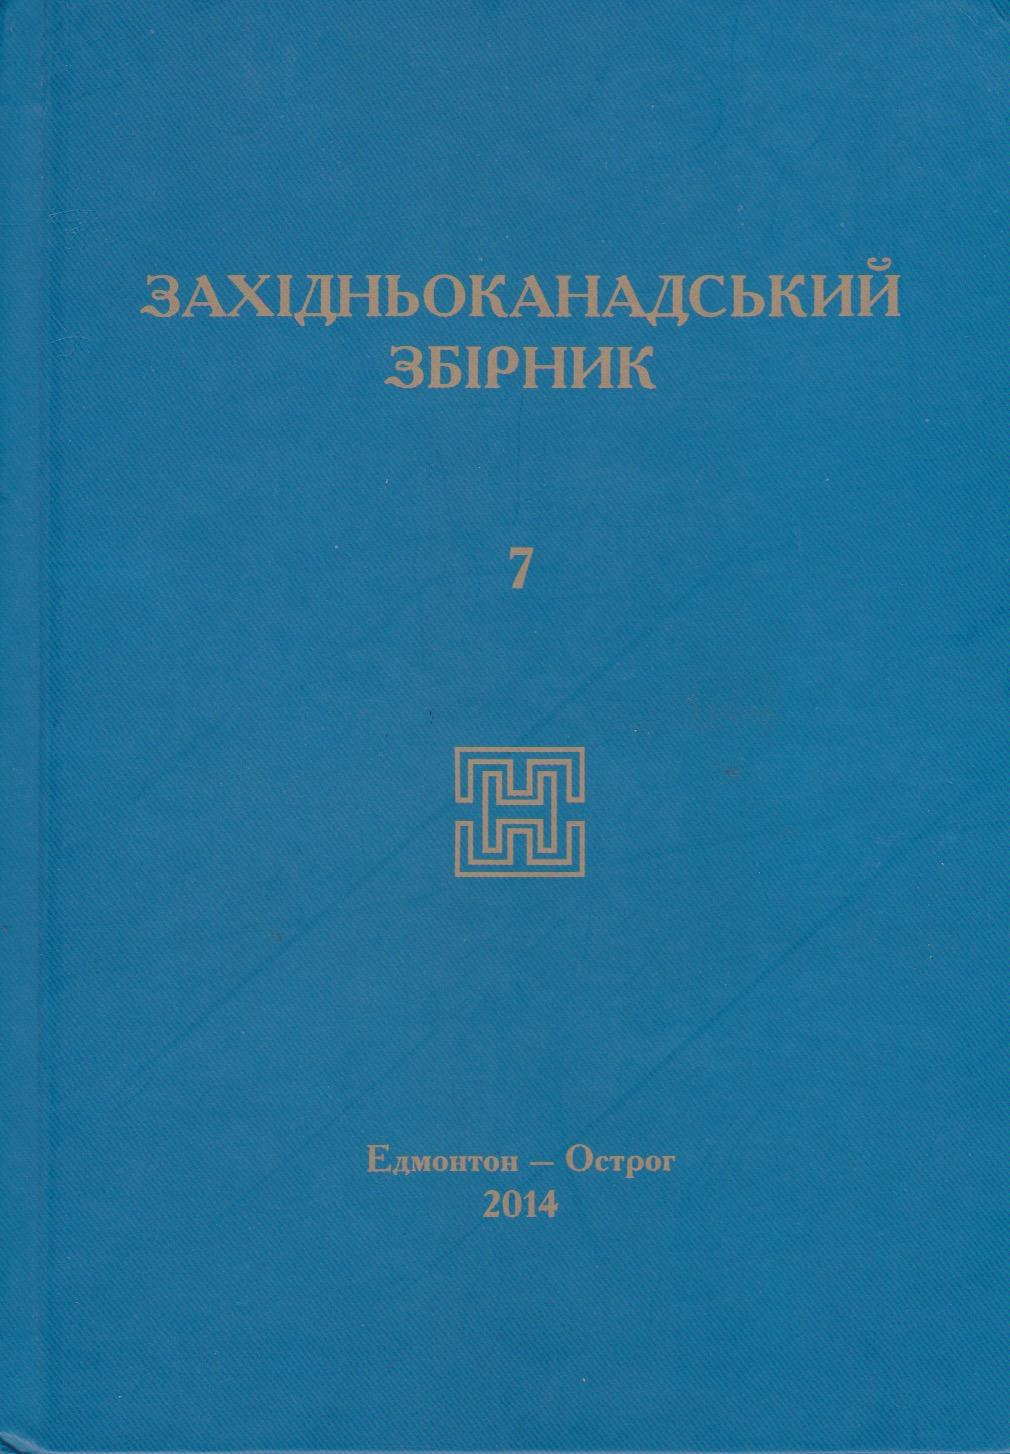 zbirnyk-7-cover